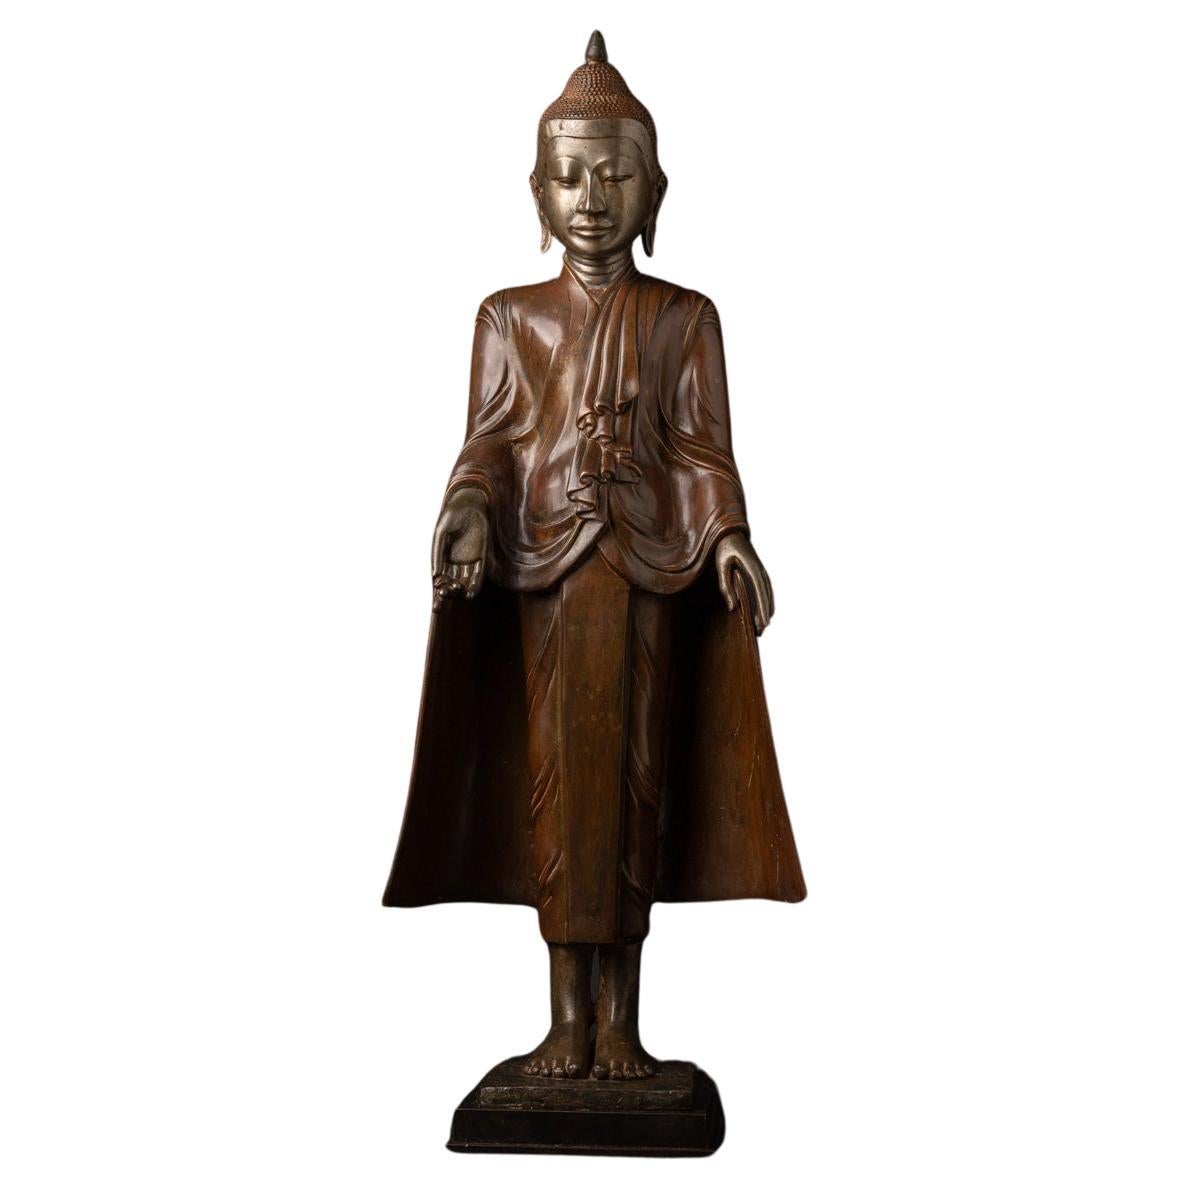 18th century special bronze Burmese Buddha statue in Amarapura style from Burma